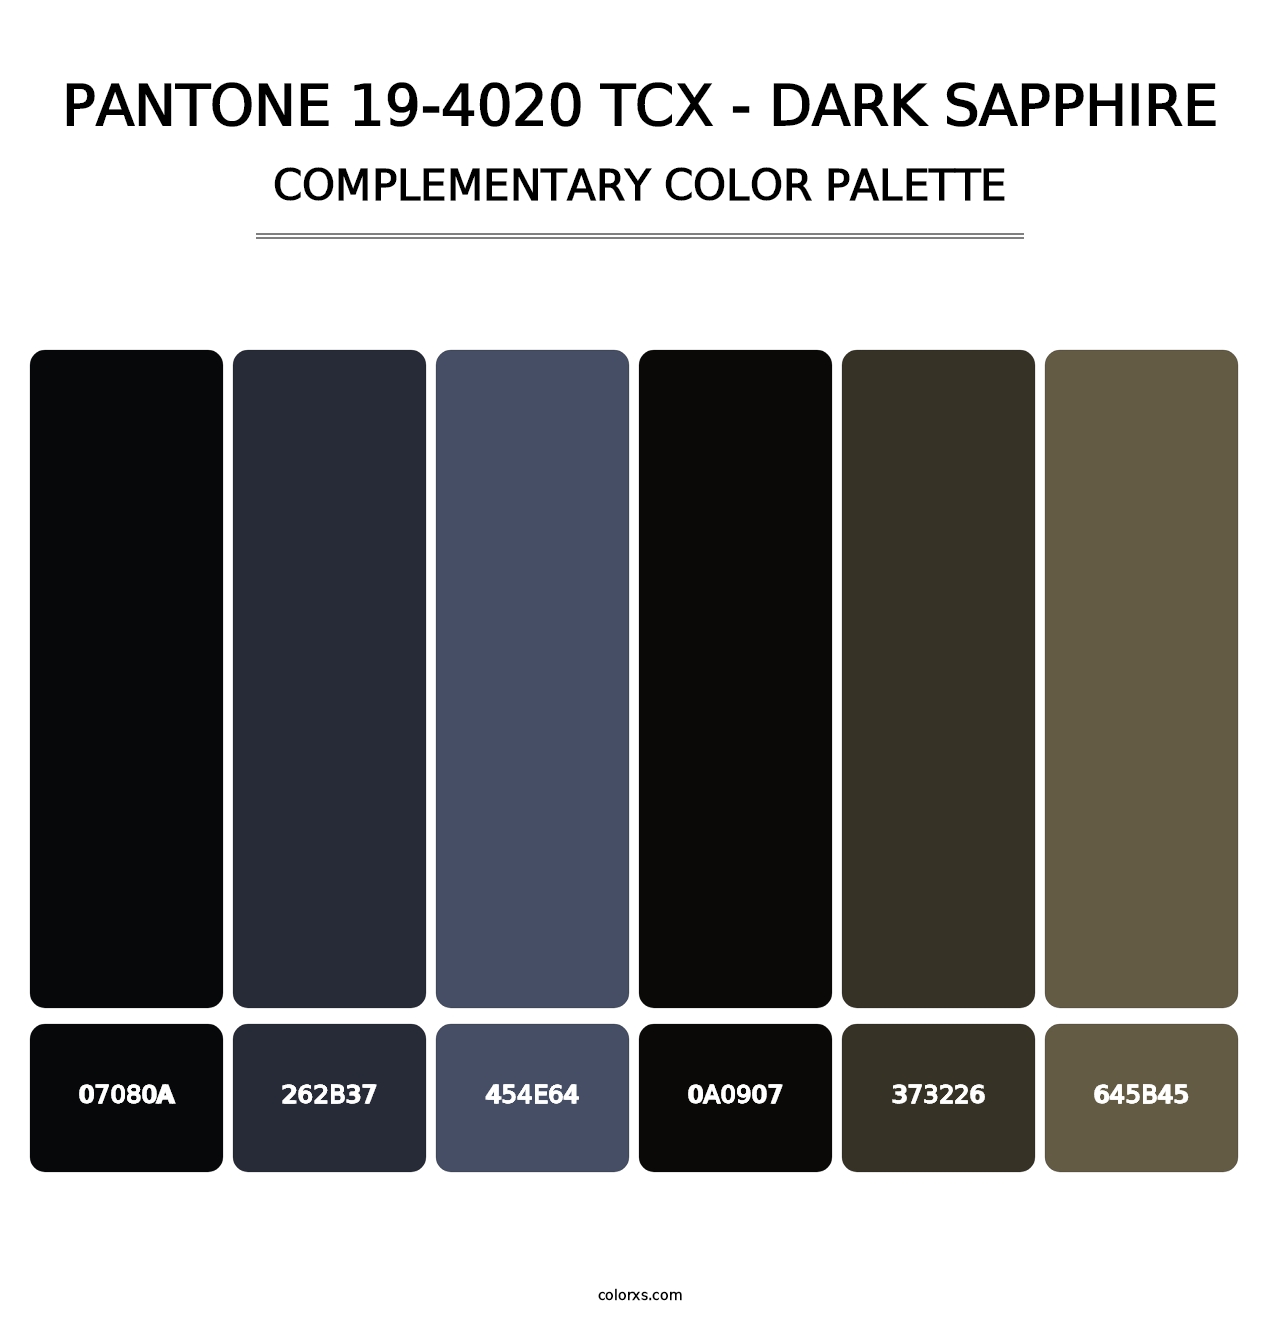 PANTONE 19-4020 TCX - Dark Sapphire - Complementary Color Palette